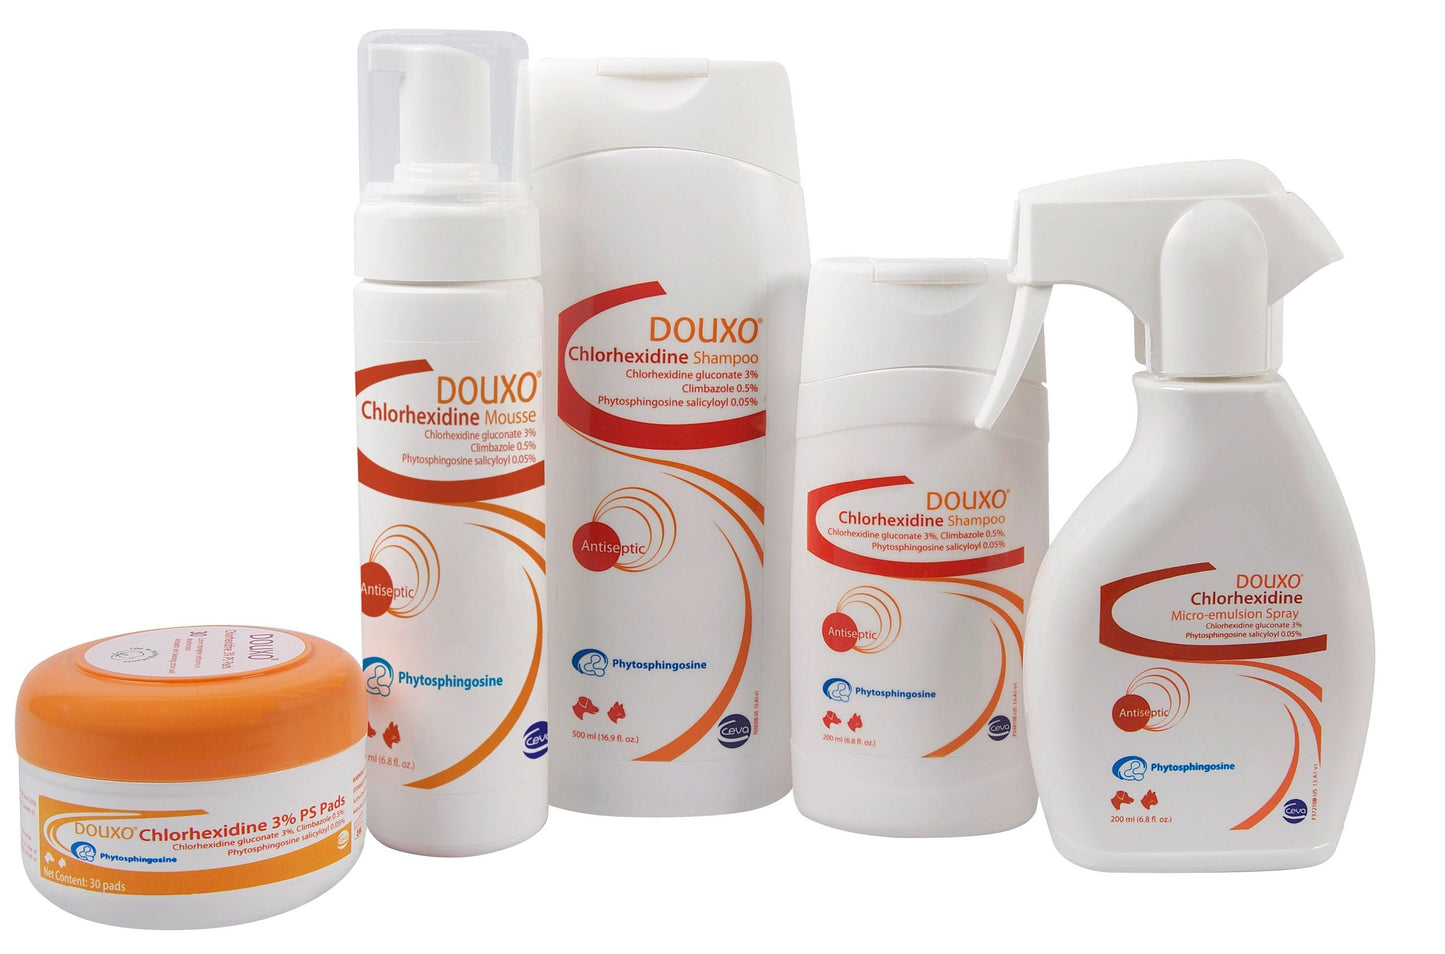 DOUXO® Chlorhexidine Product Line